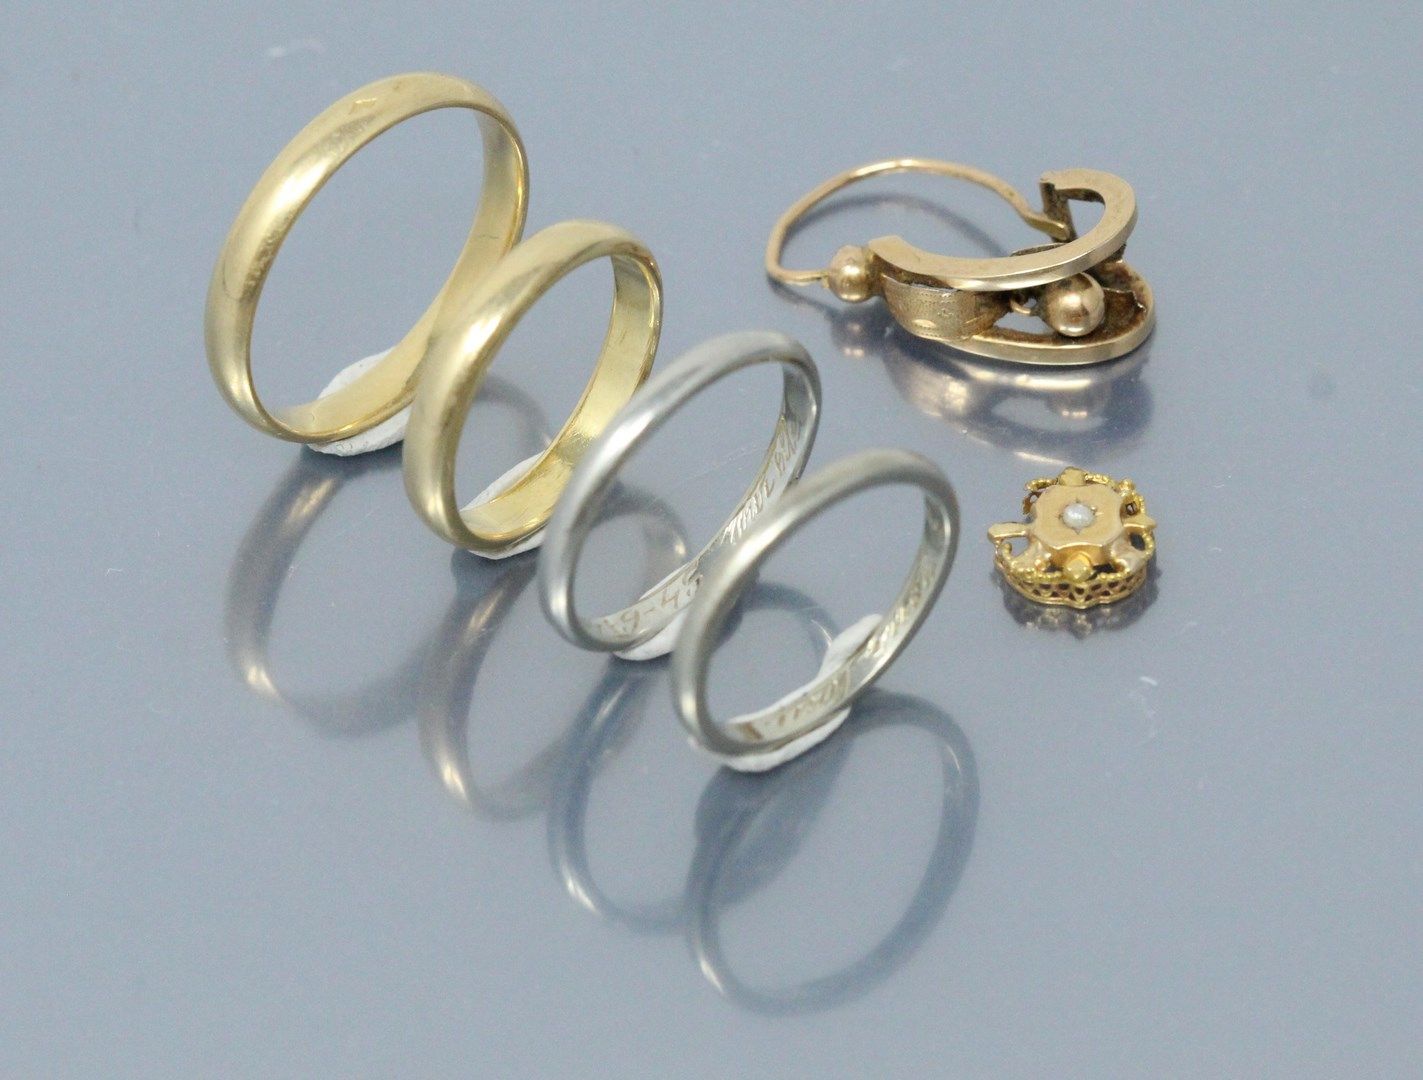 Null 拍品包括一个小碎片、一个耳环和四个结婚戒指：两个白金的，两个黄金的，都是18K的（750）。

重量：12.48克。